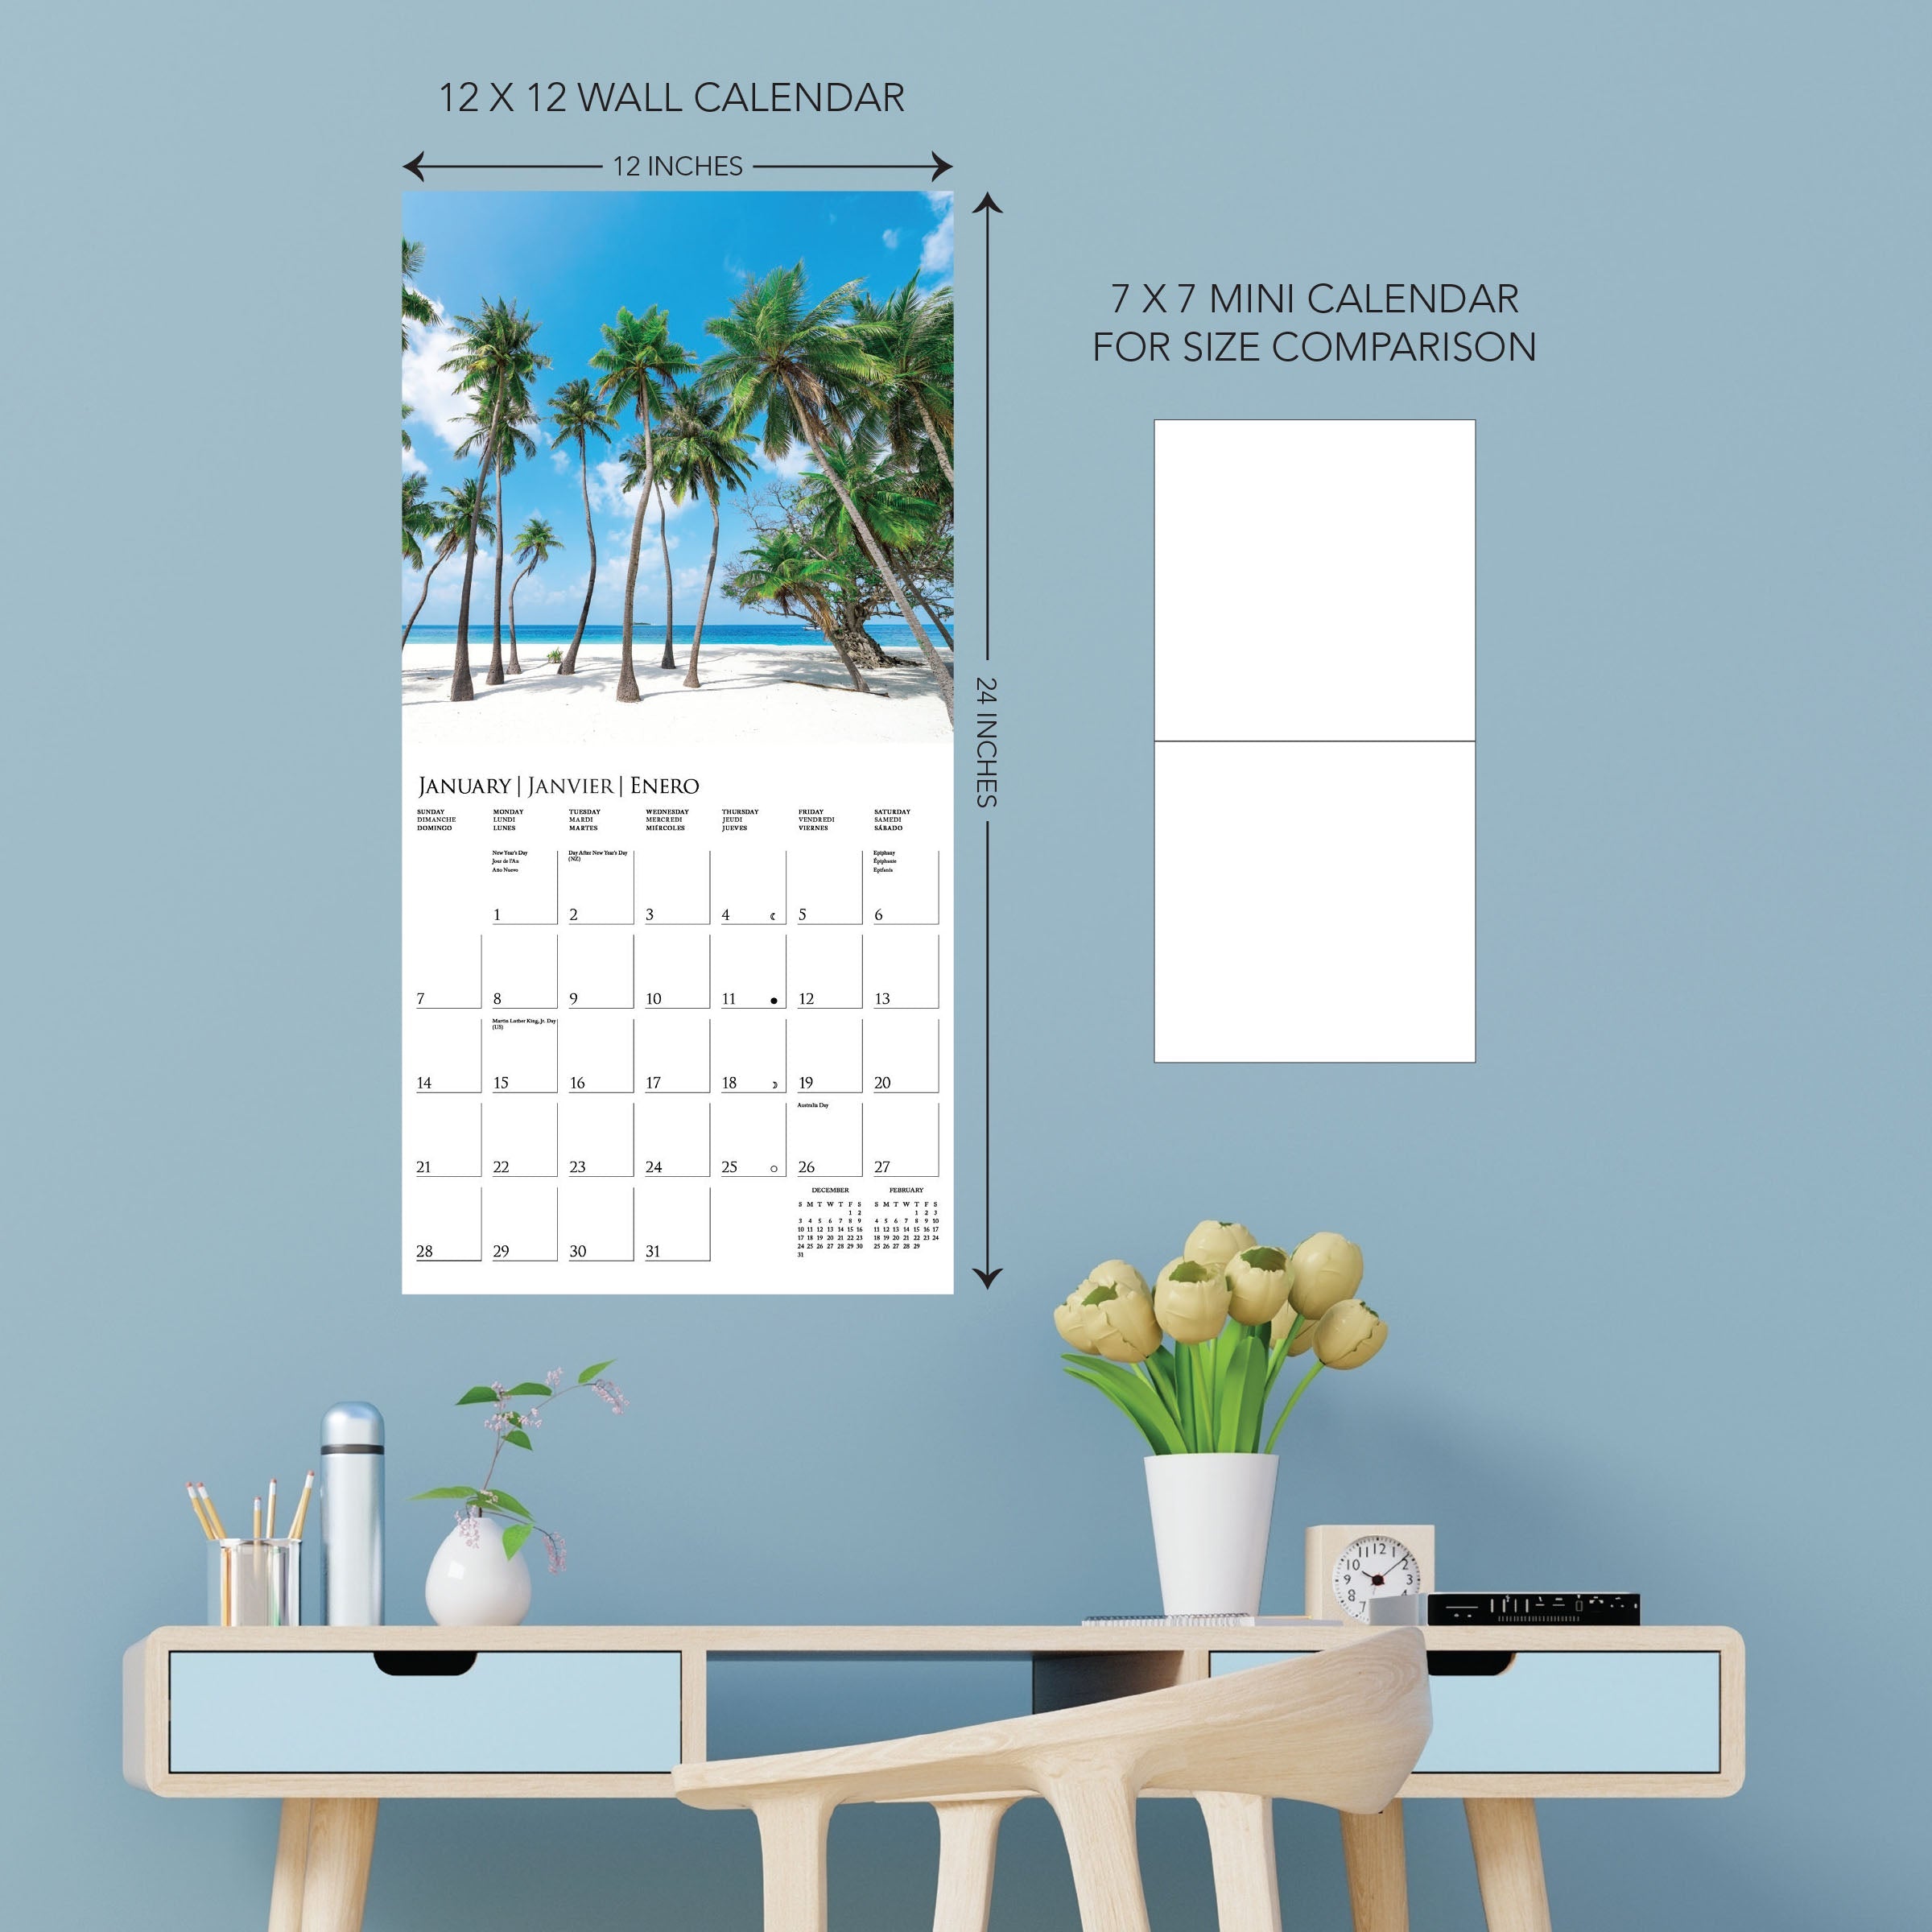 Island Paradise 2024 Wall Calendar    